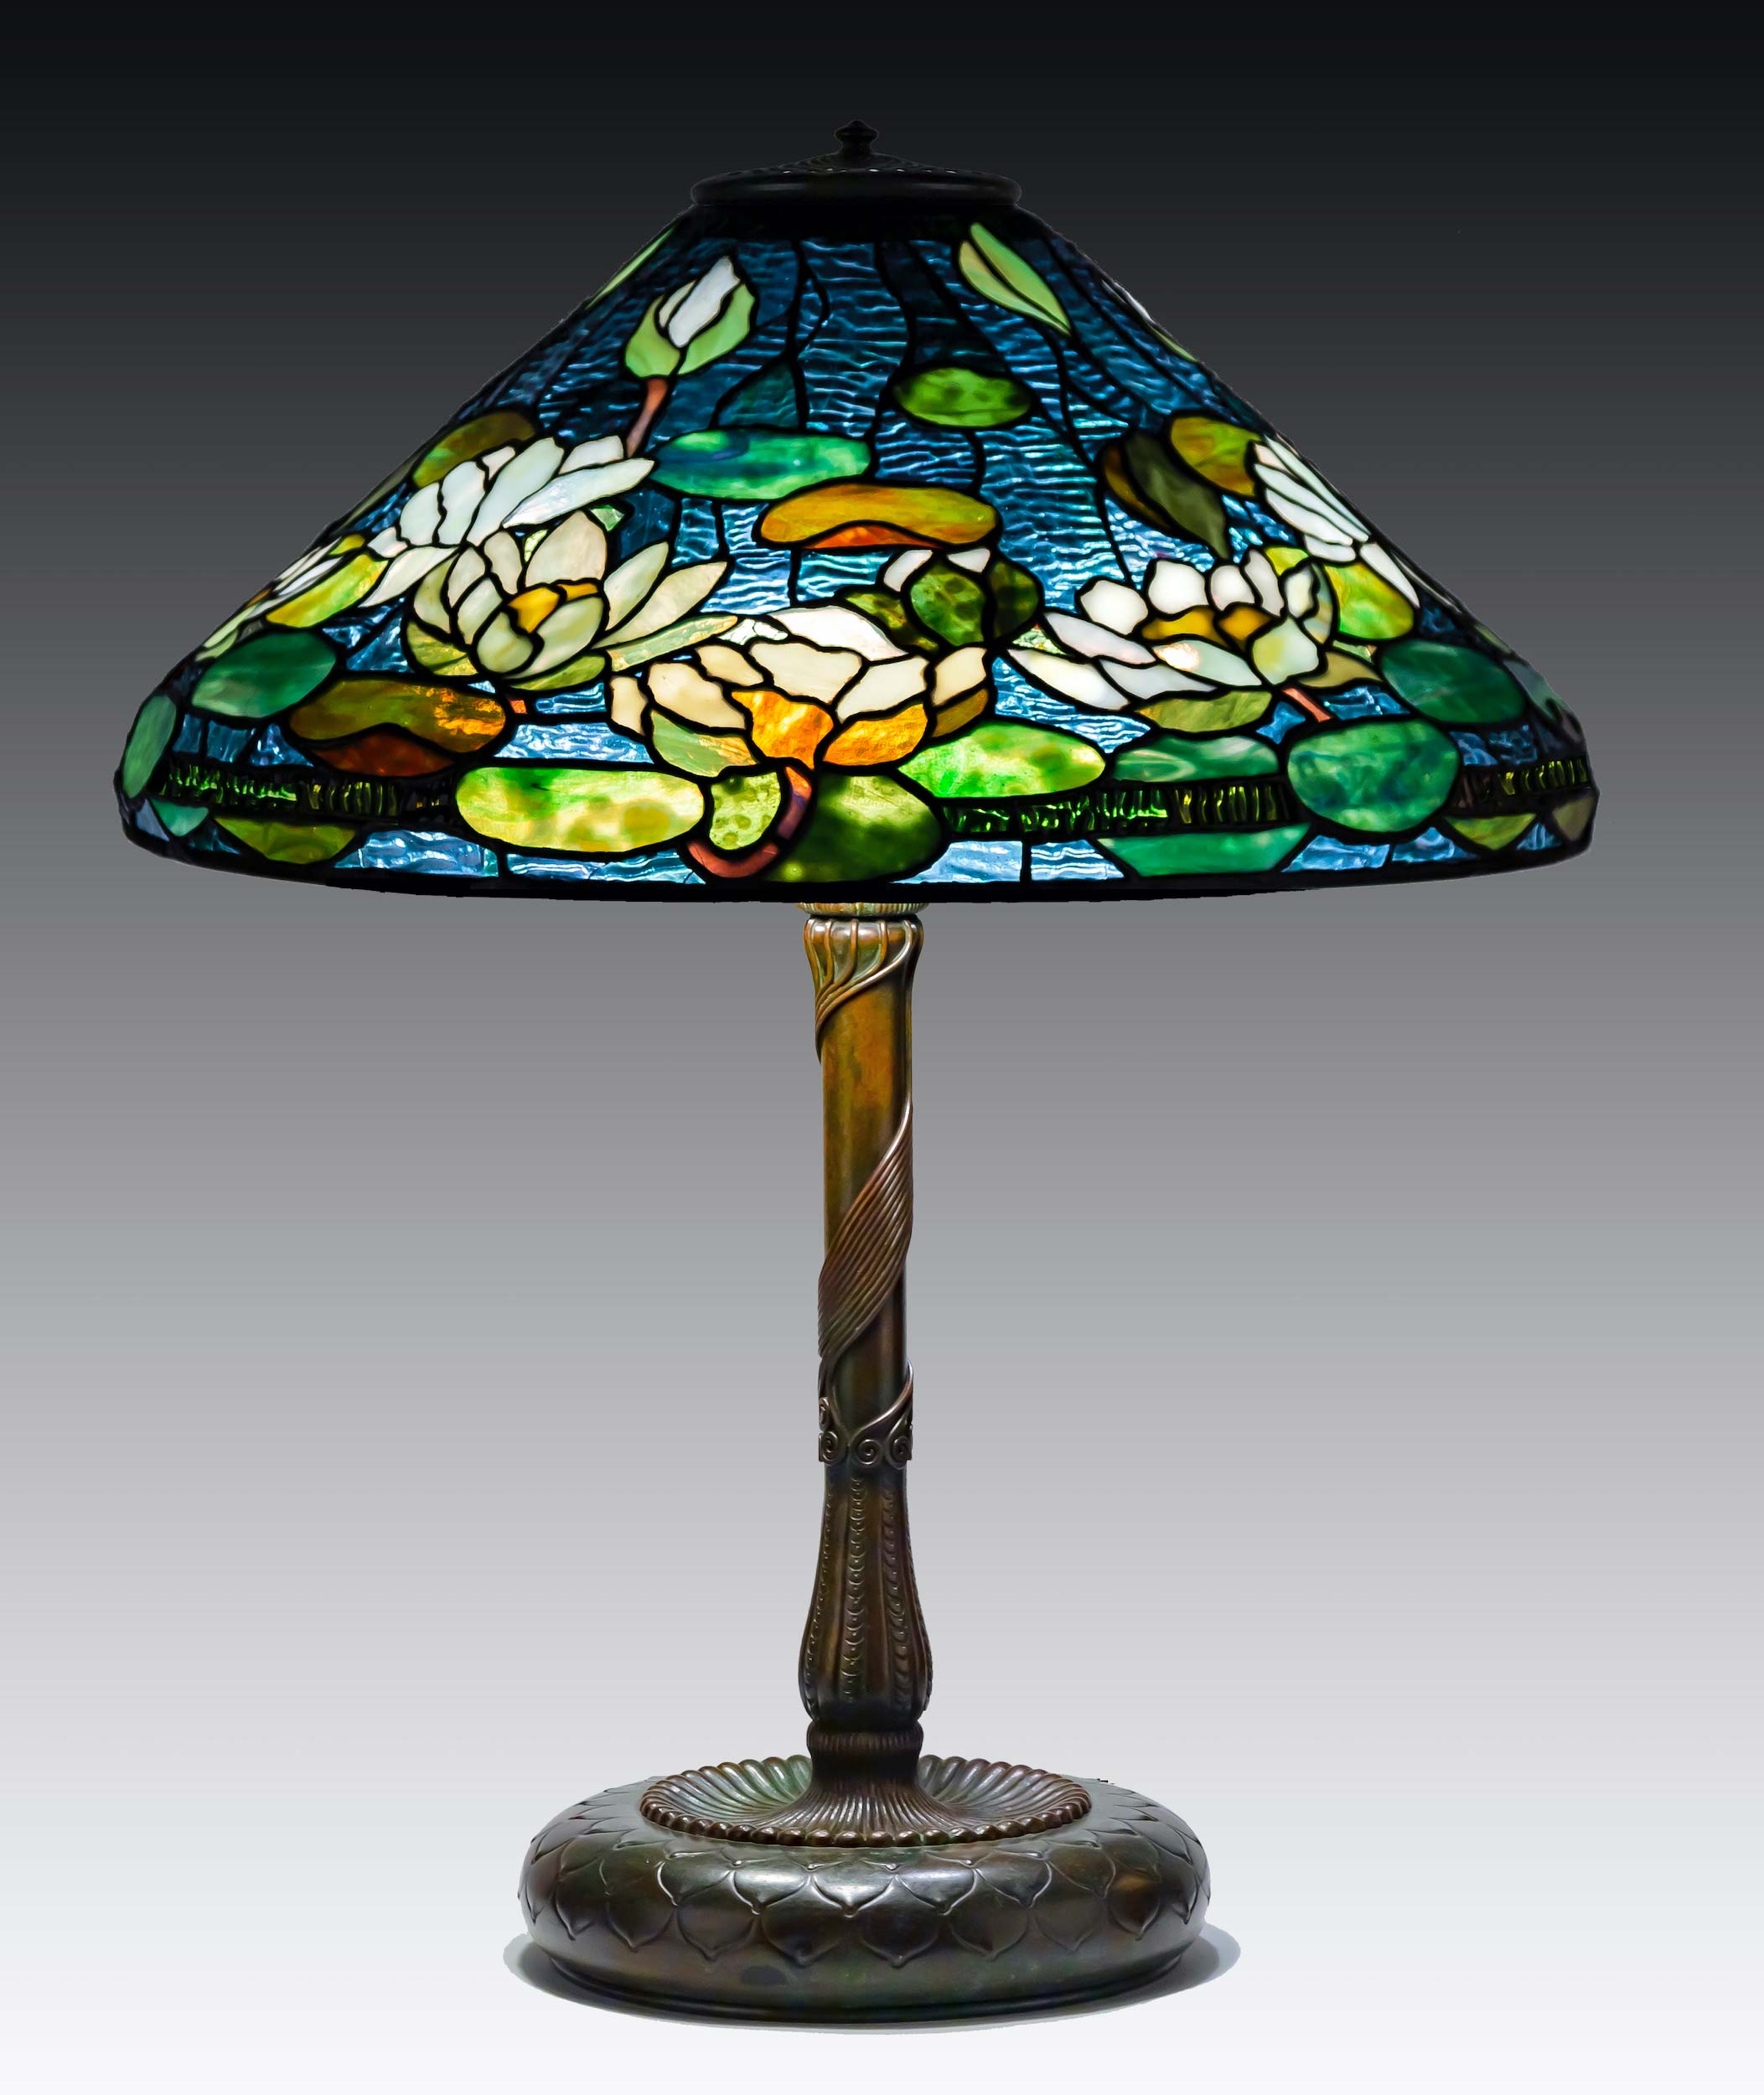 New York Pond Lily Table Lamp, Tiffany Studios, $60,000-$80,000